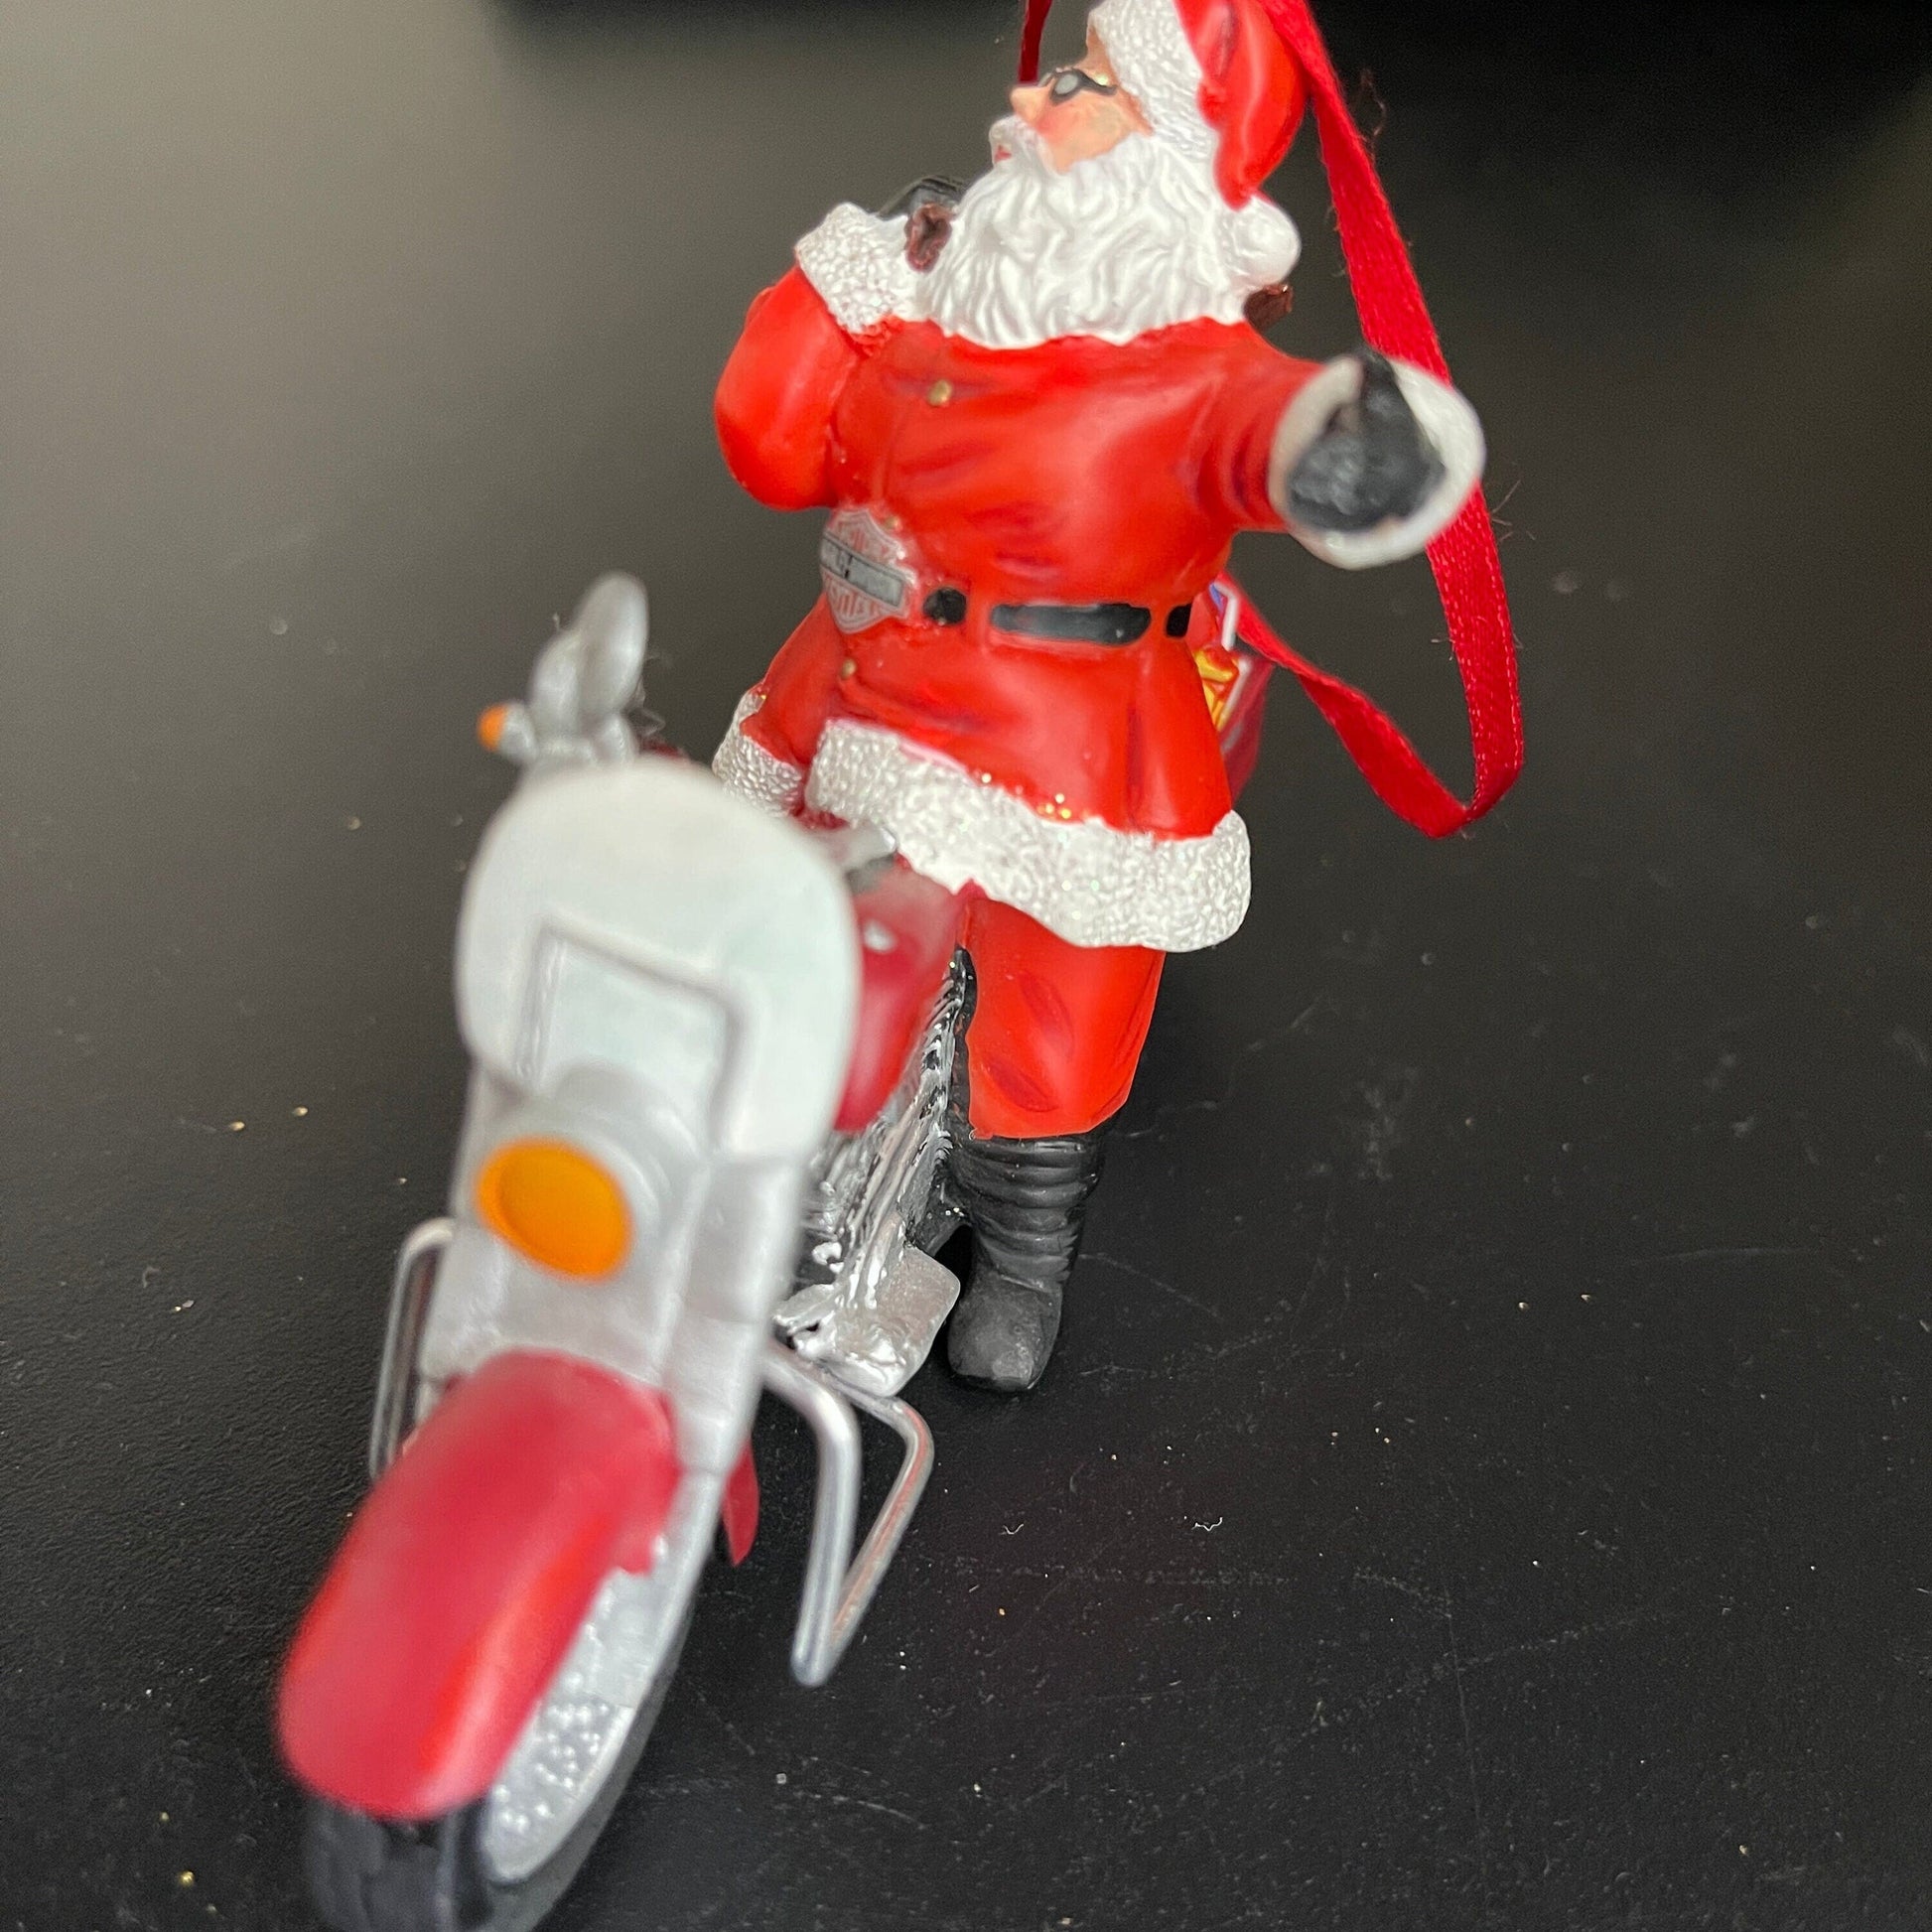 Sensational Santa Clause Riding a Motorbike vintage collectible Christmas ornament